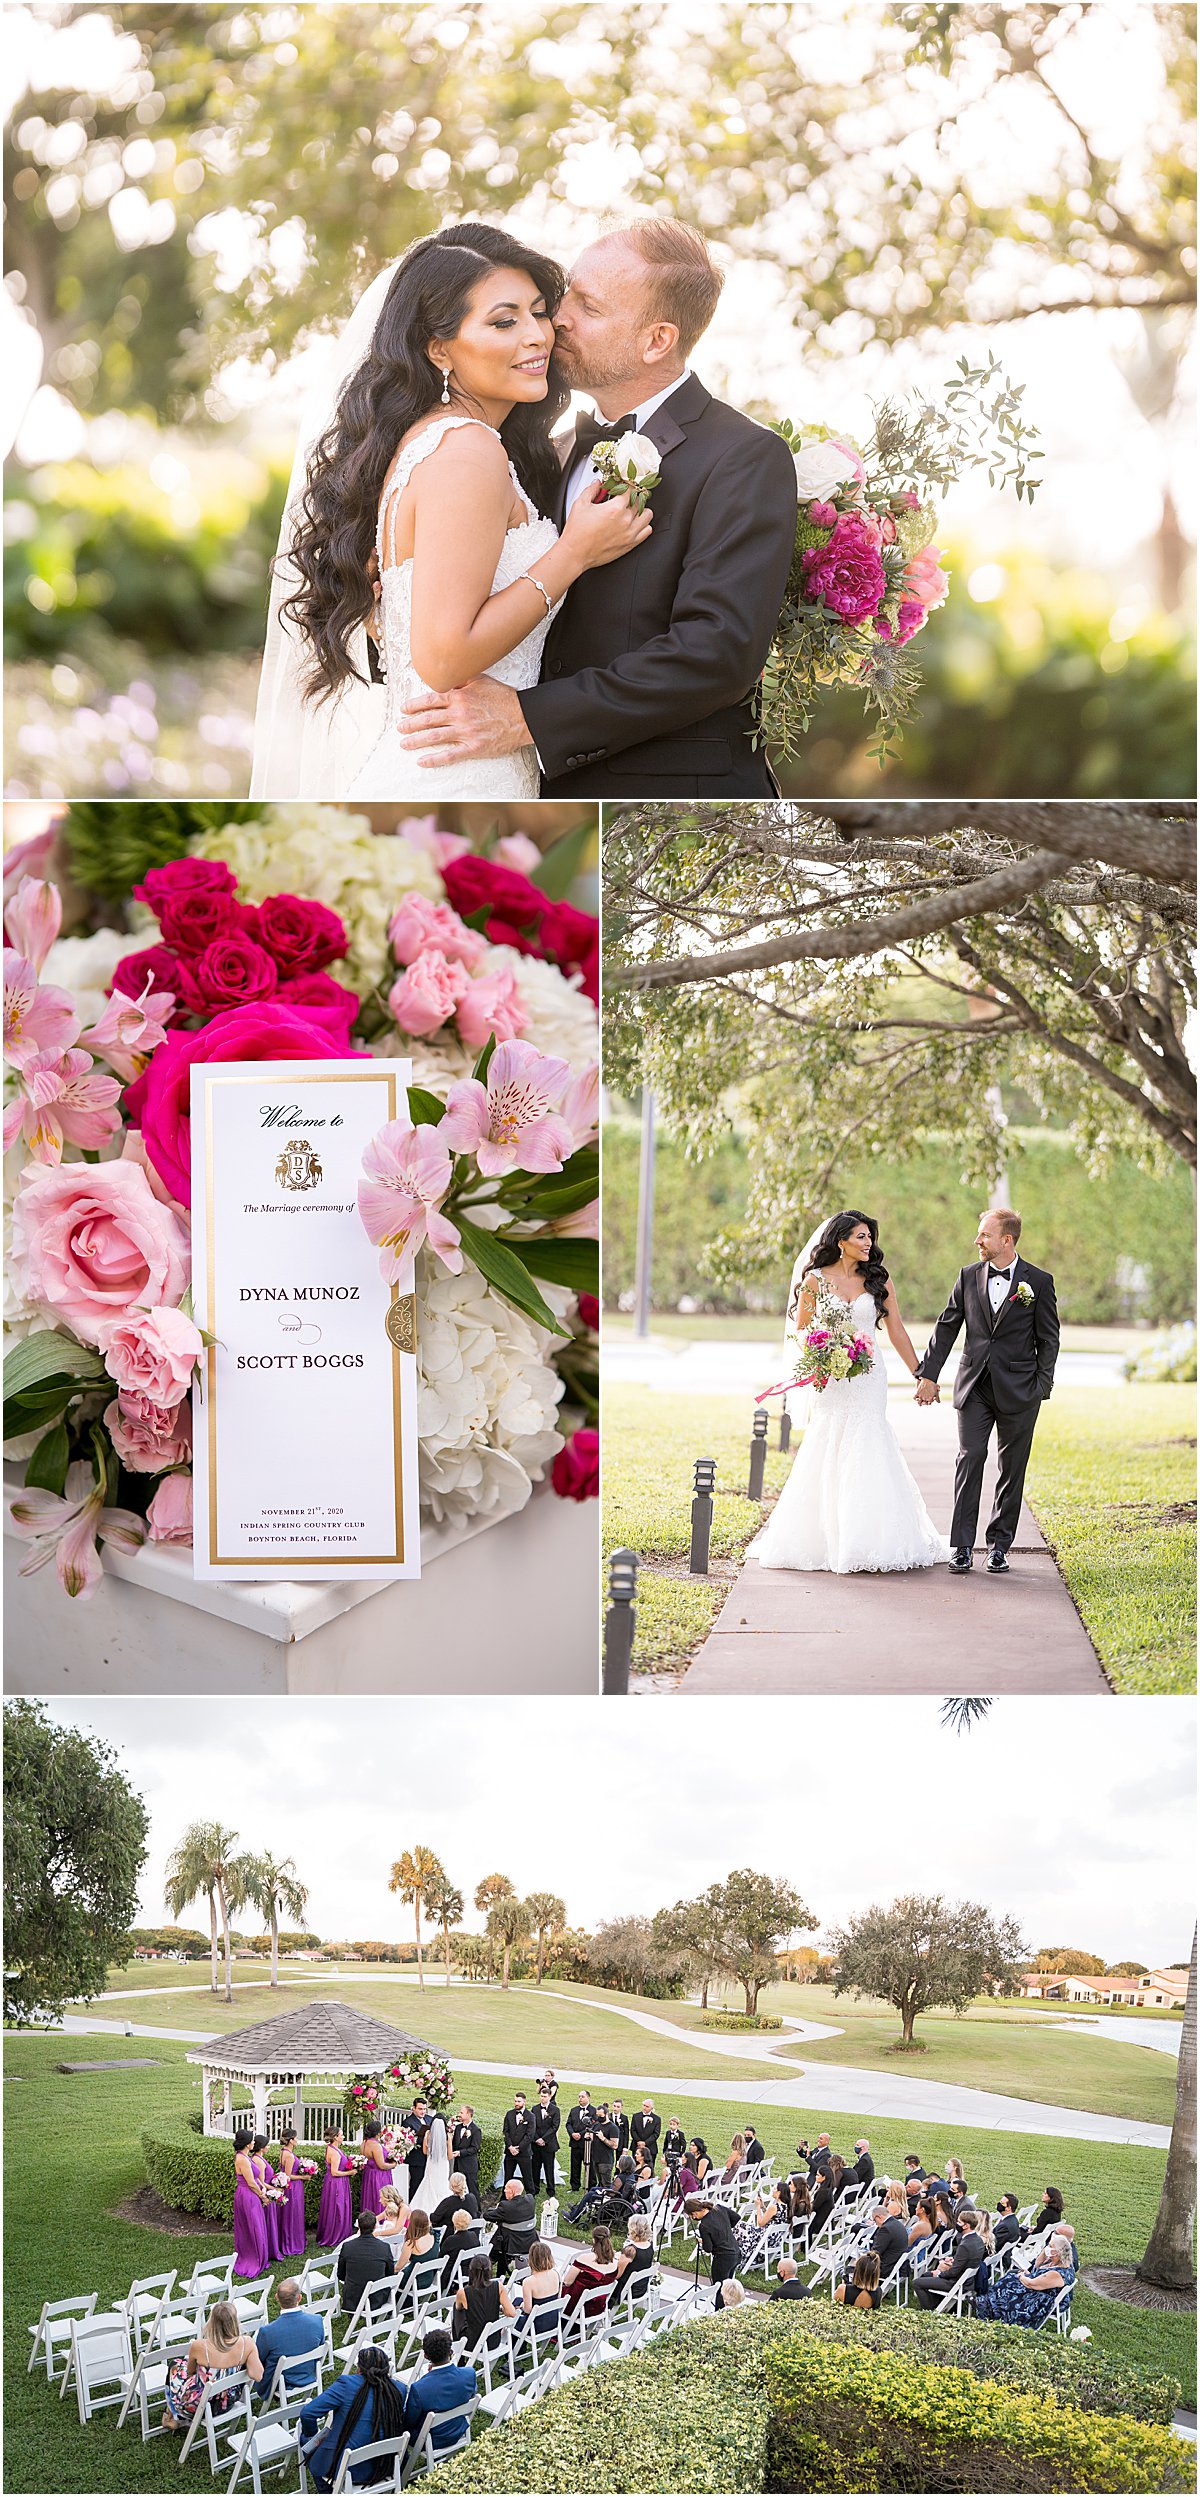 Elegant Purple, Pink, and White Wedding | Indian Spring Country Club | Boynton Beach Florida | Married in Palm Beach | www.marriedinpalmbeach.com | Poirier Wedding Photography